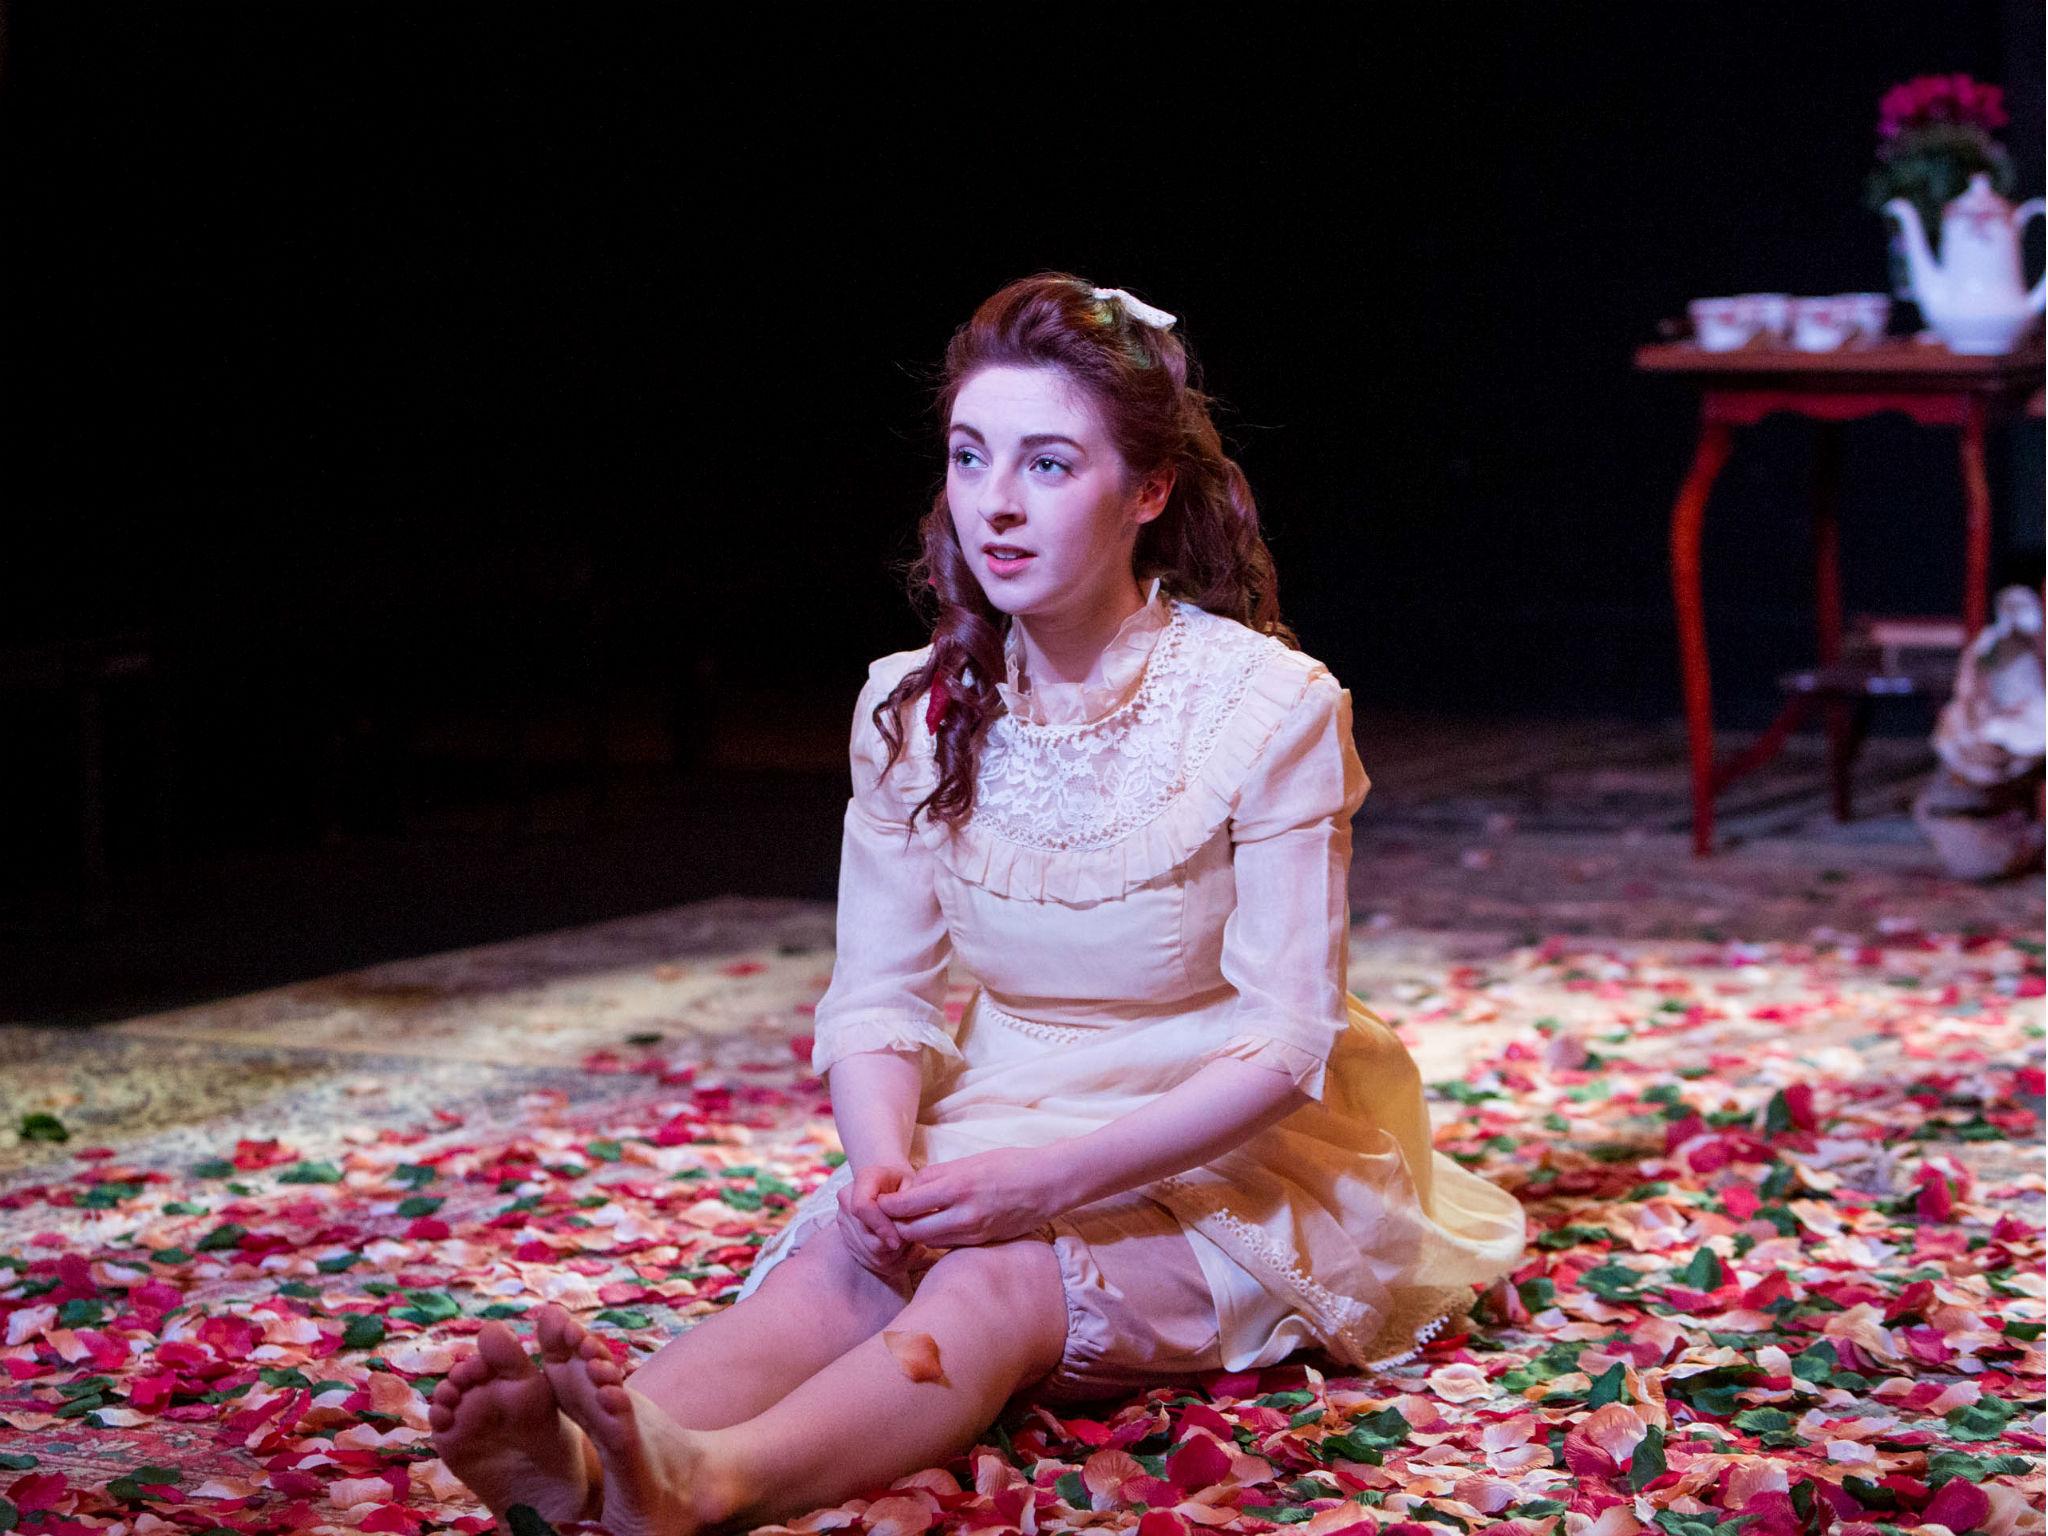 Venice van Someran as Margaret in 'Dear Brutus' at Southwark Playhouse